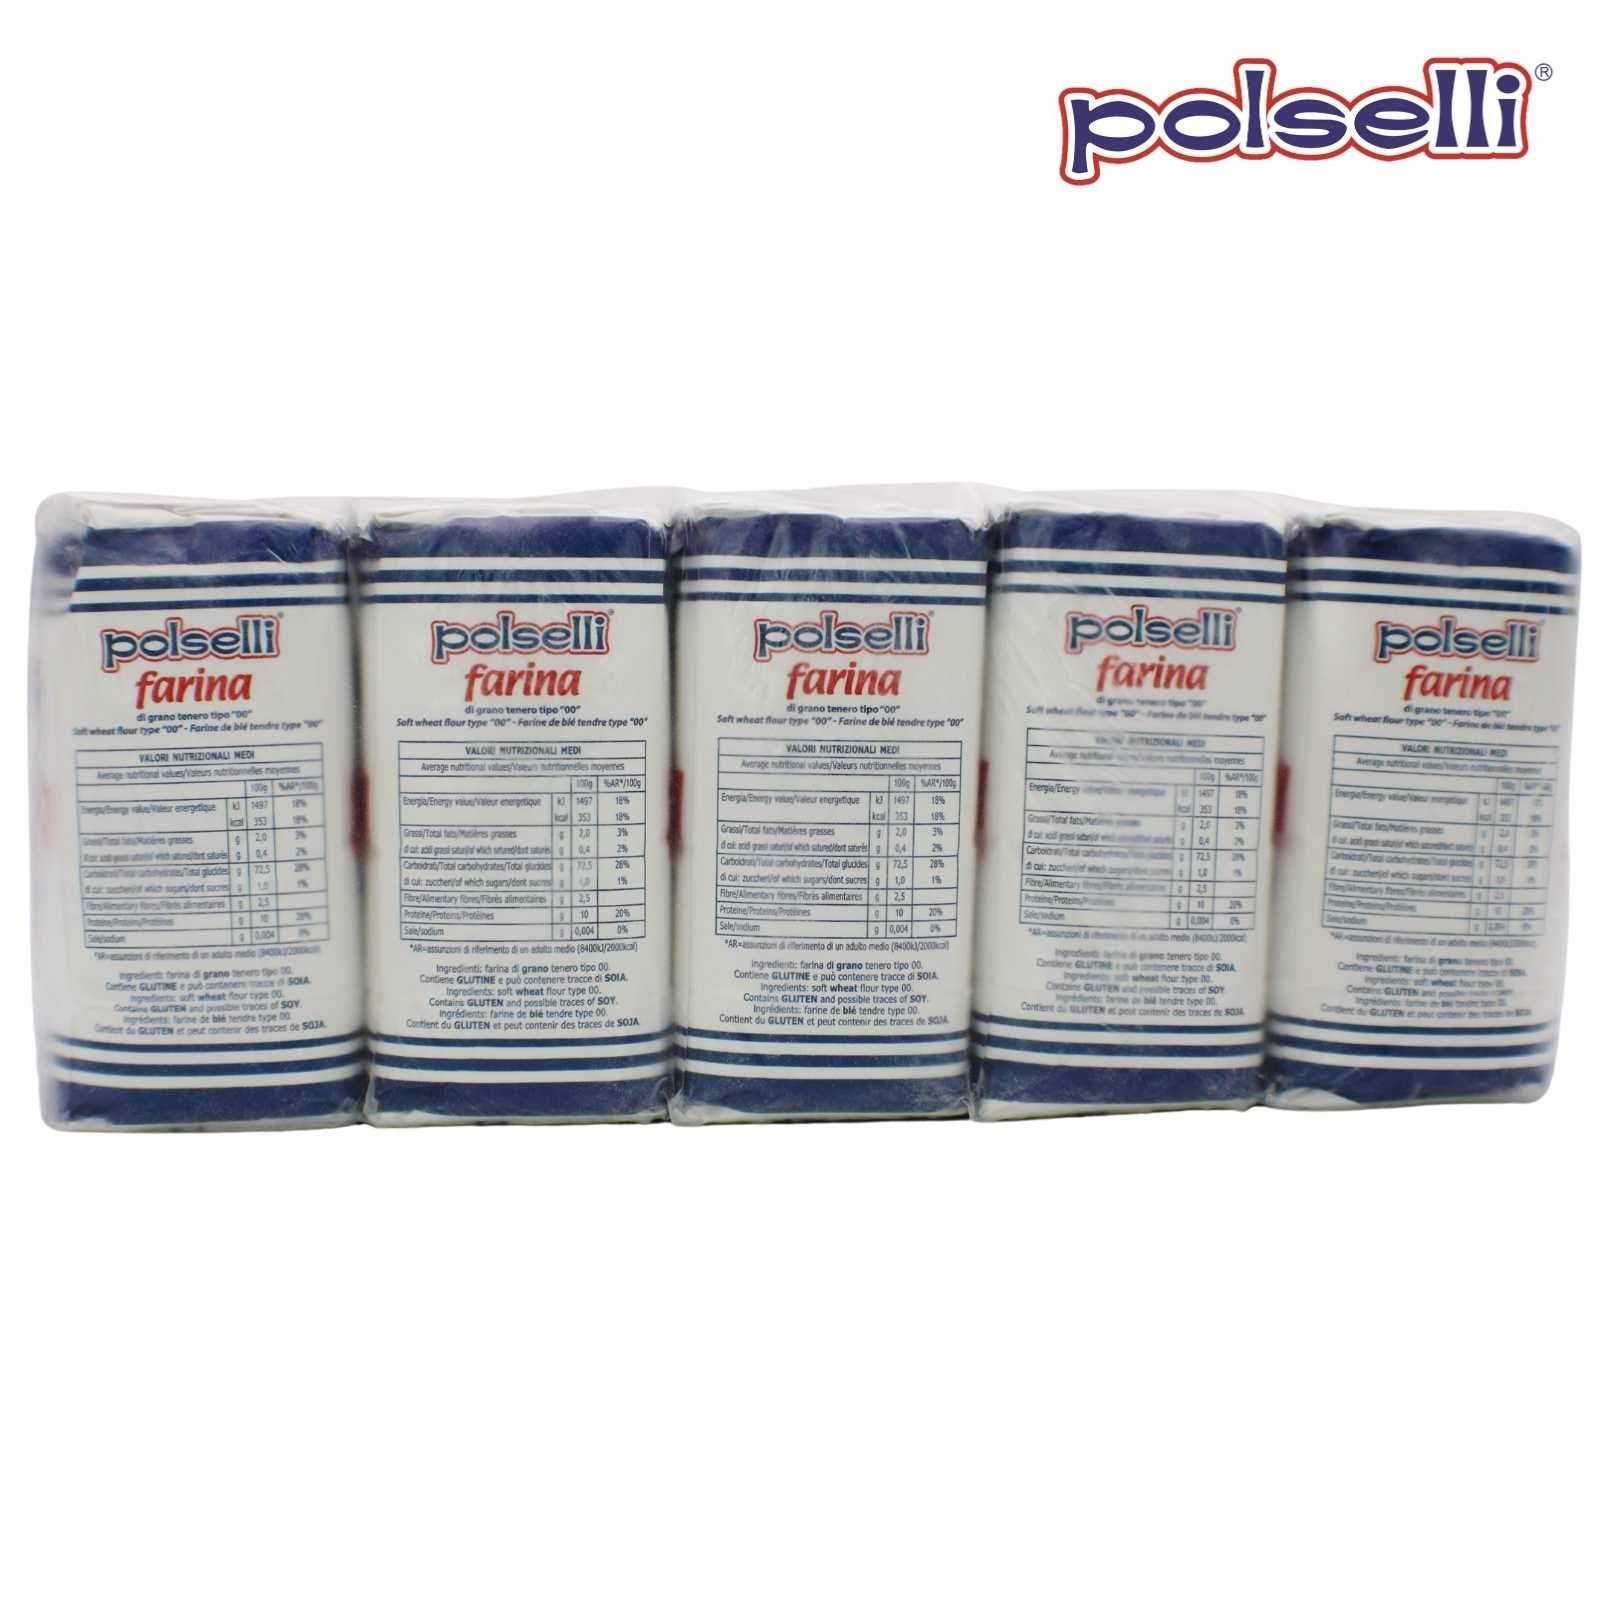 Polselli: 00 All Purpose Flour 2.2 lb. Bag - Wholesale Italian Food